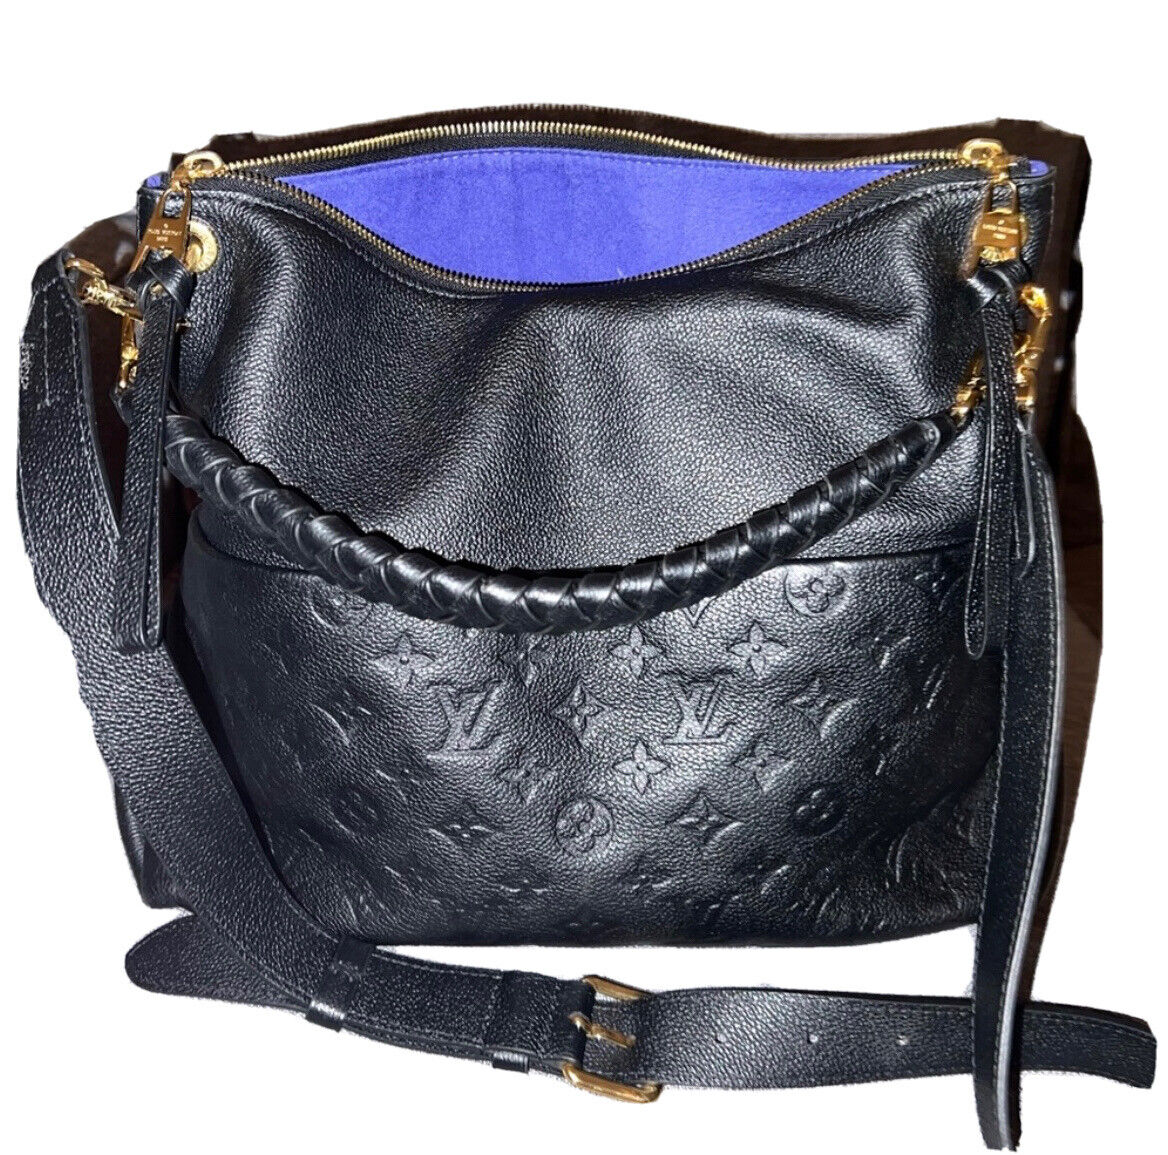 Maida Hobo Monogram Empreinte Leather in Black - Handbags M45522, L*V –  ZAK BAGS ©️